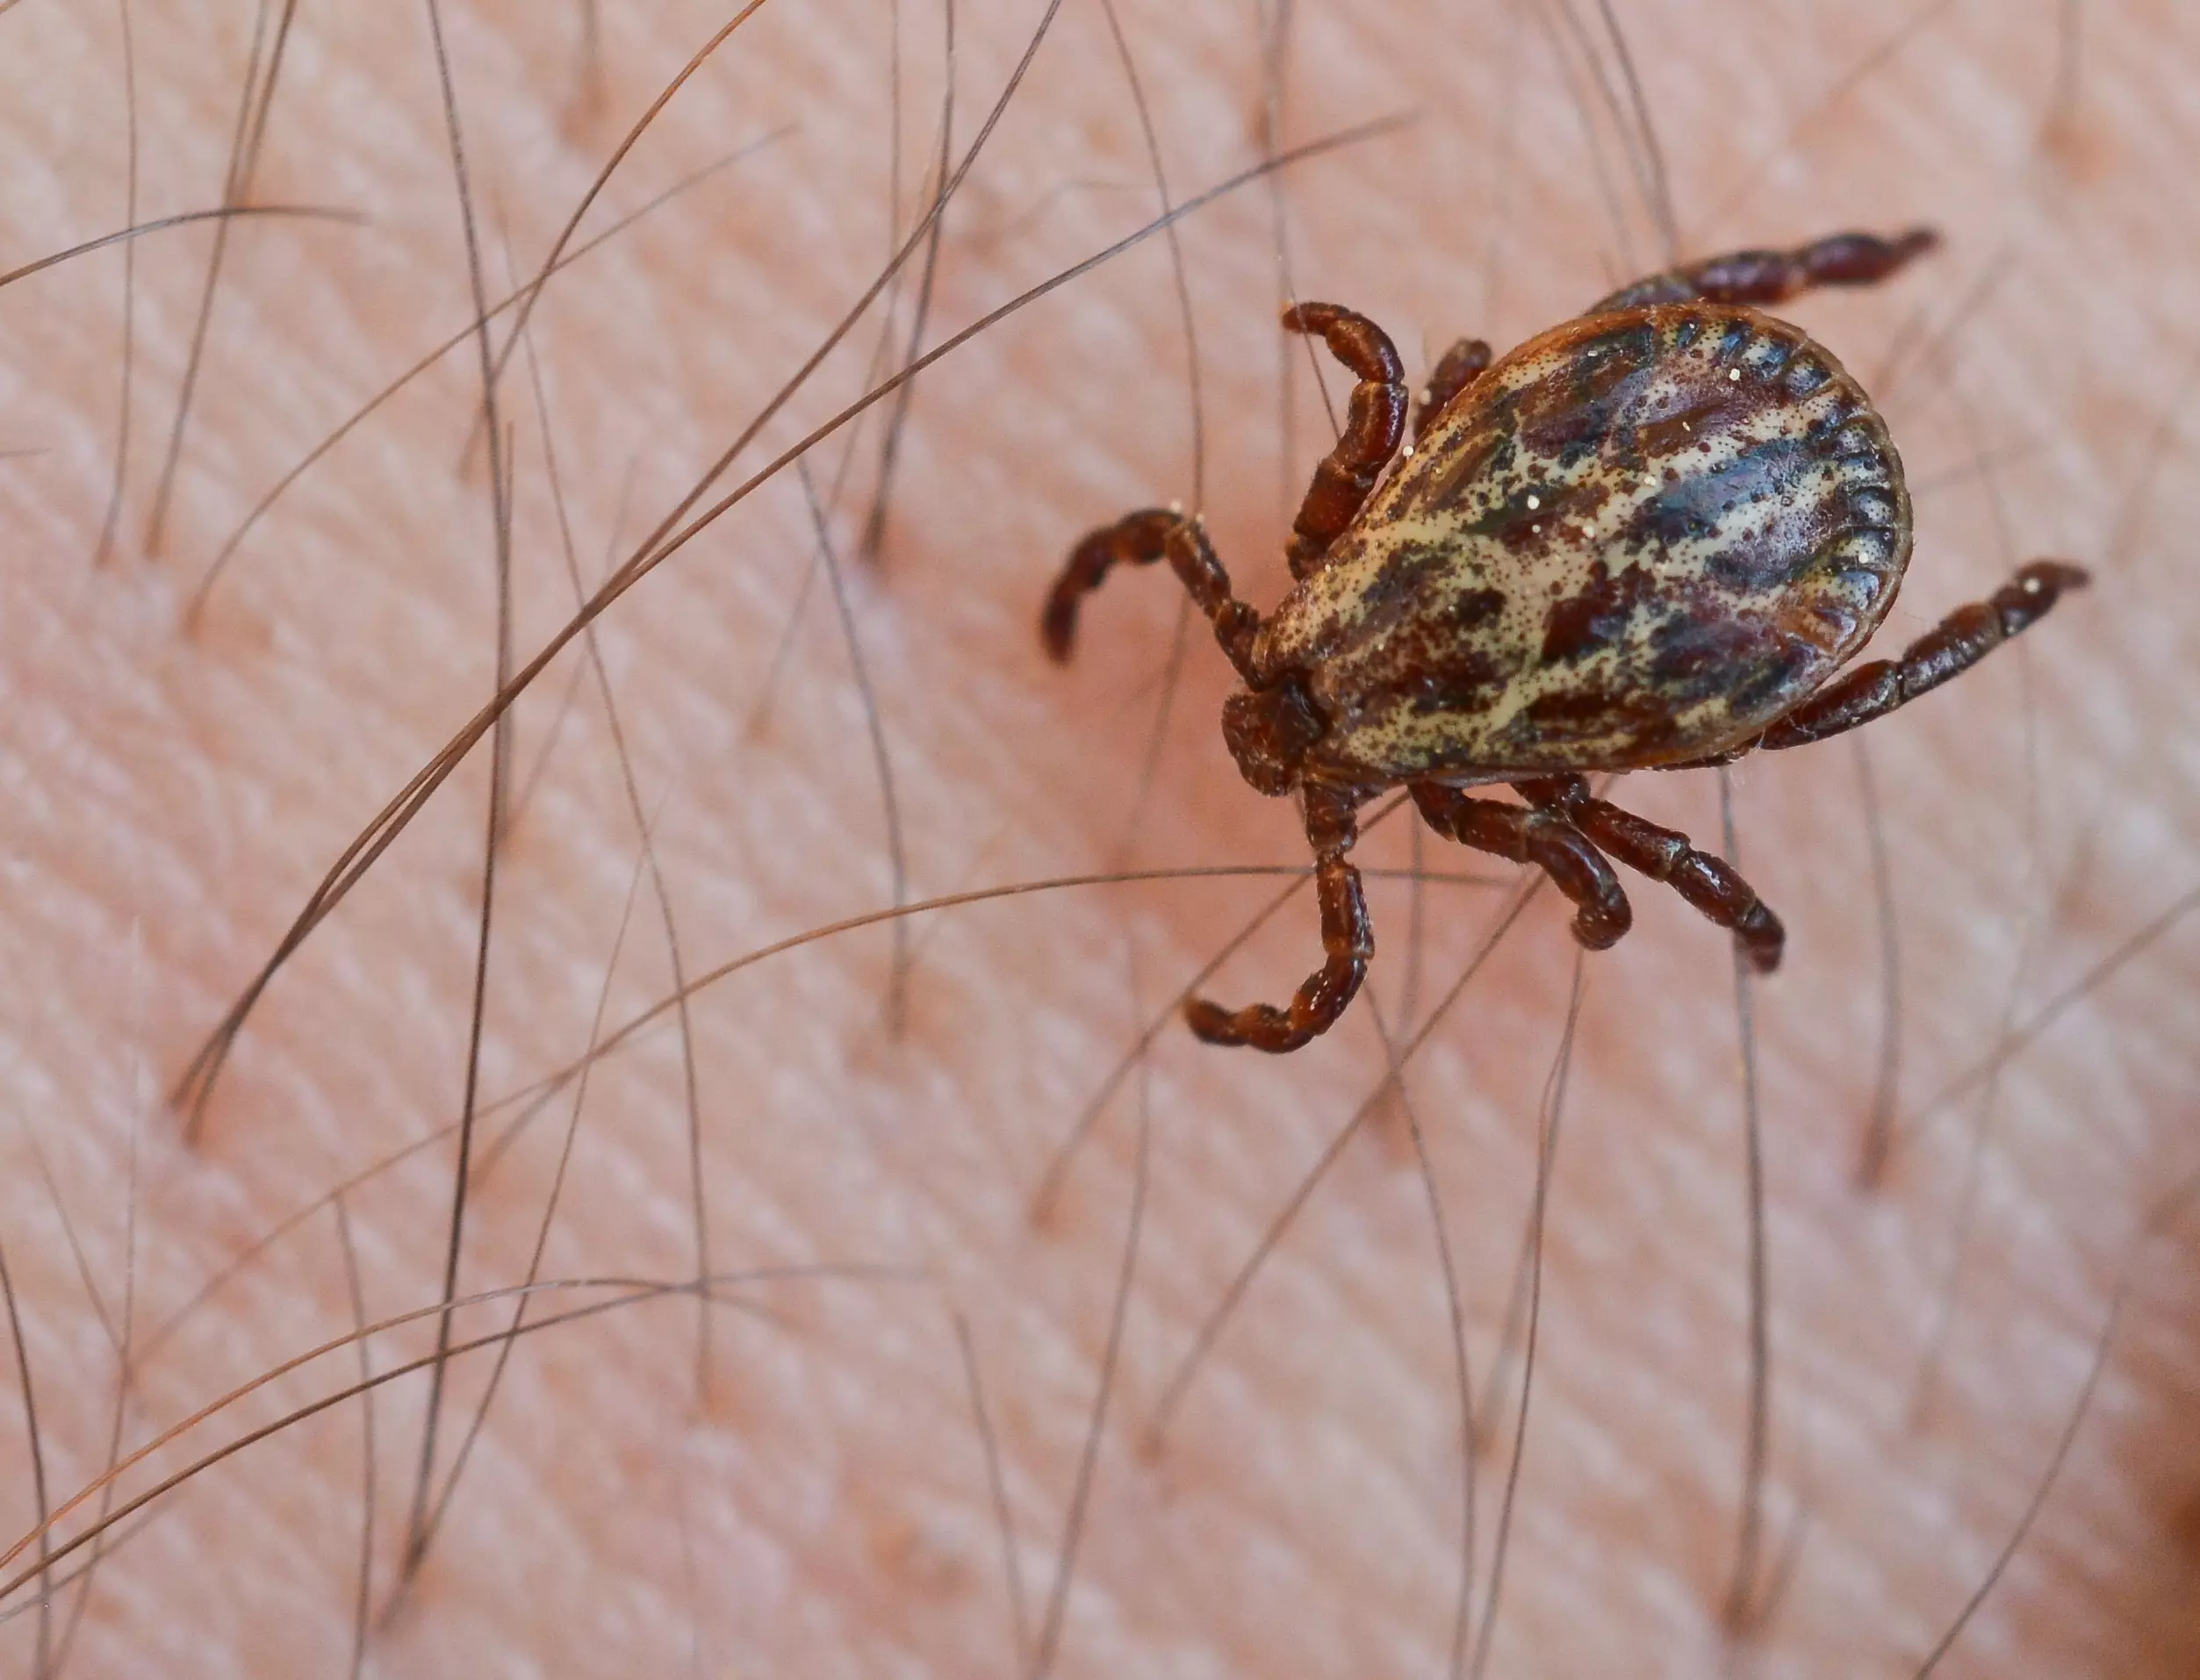 The tick can cause malaria-like symptoms.